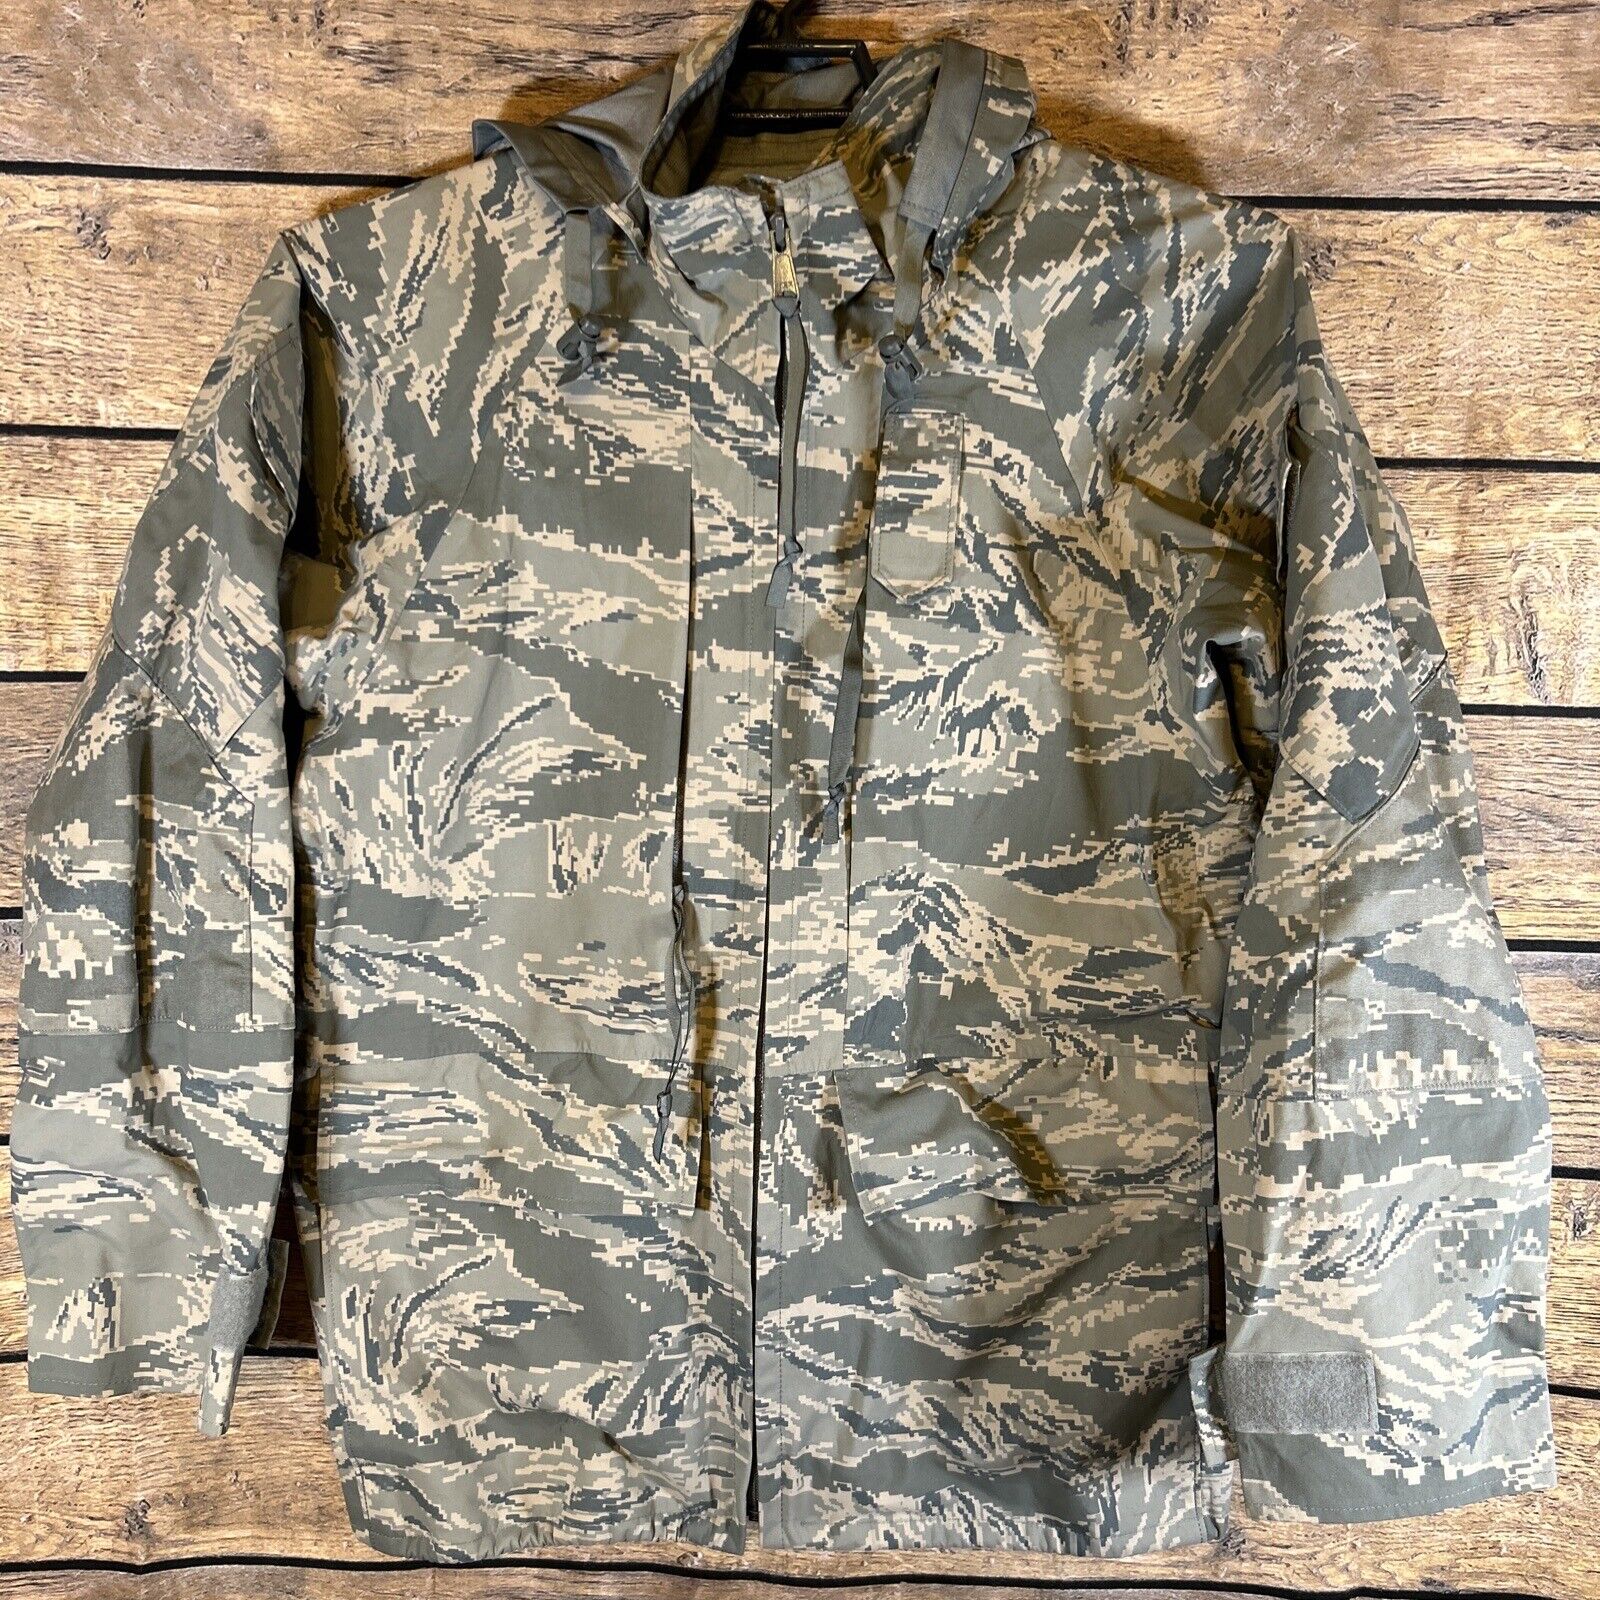 USAF SMALL SHORT GoreTex Parka All Purpose Environmental Camo Jacket Coat - AC